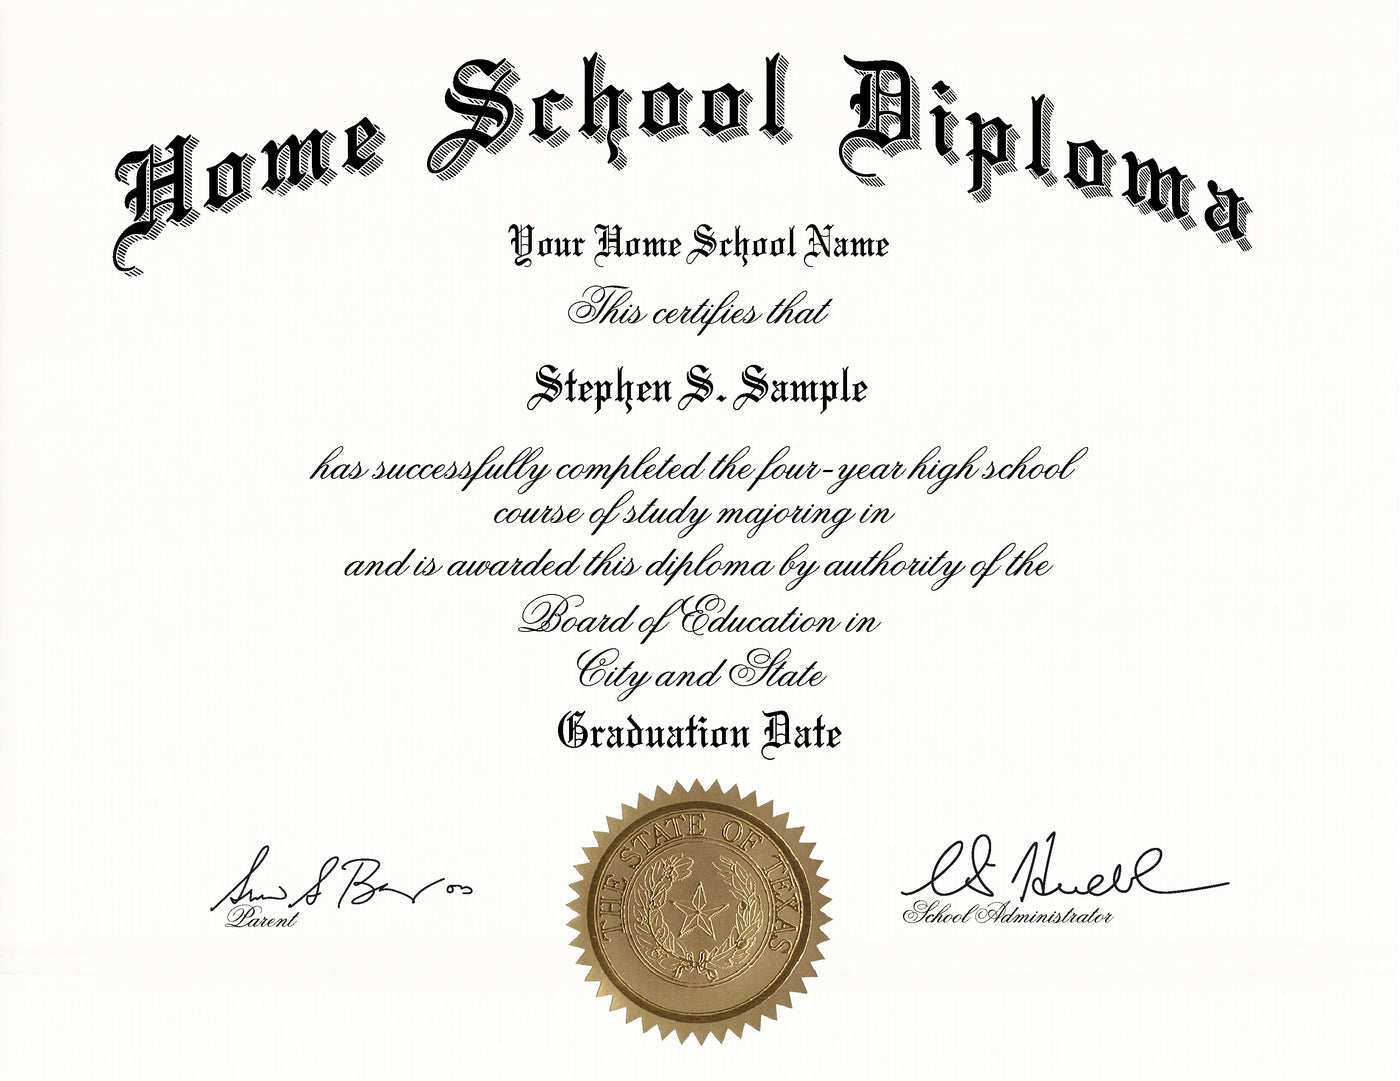 Homeschool Diploma Layout 2